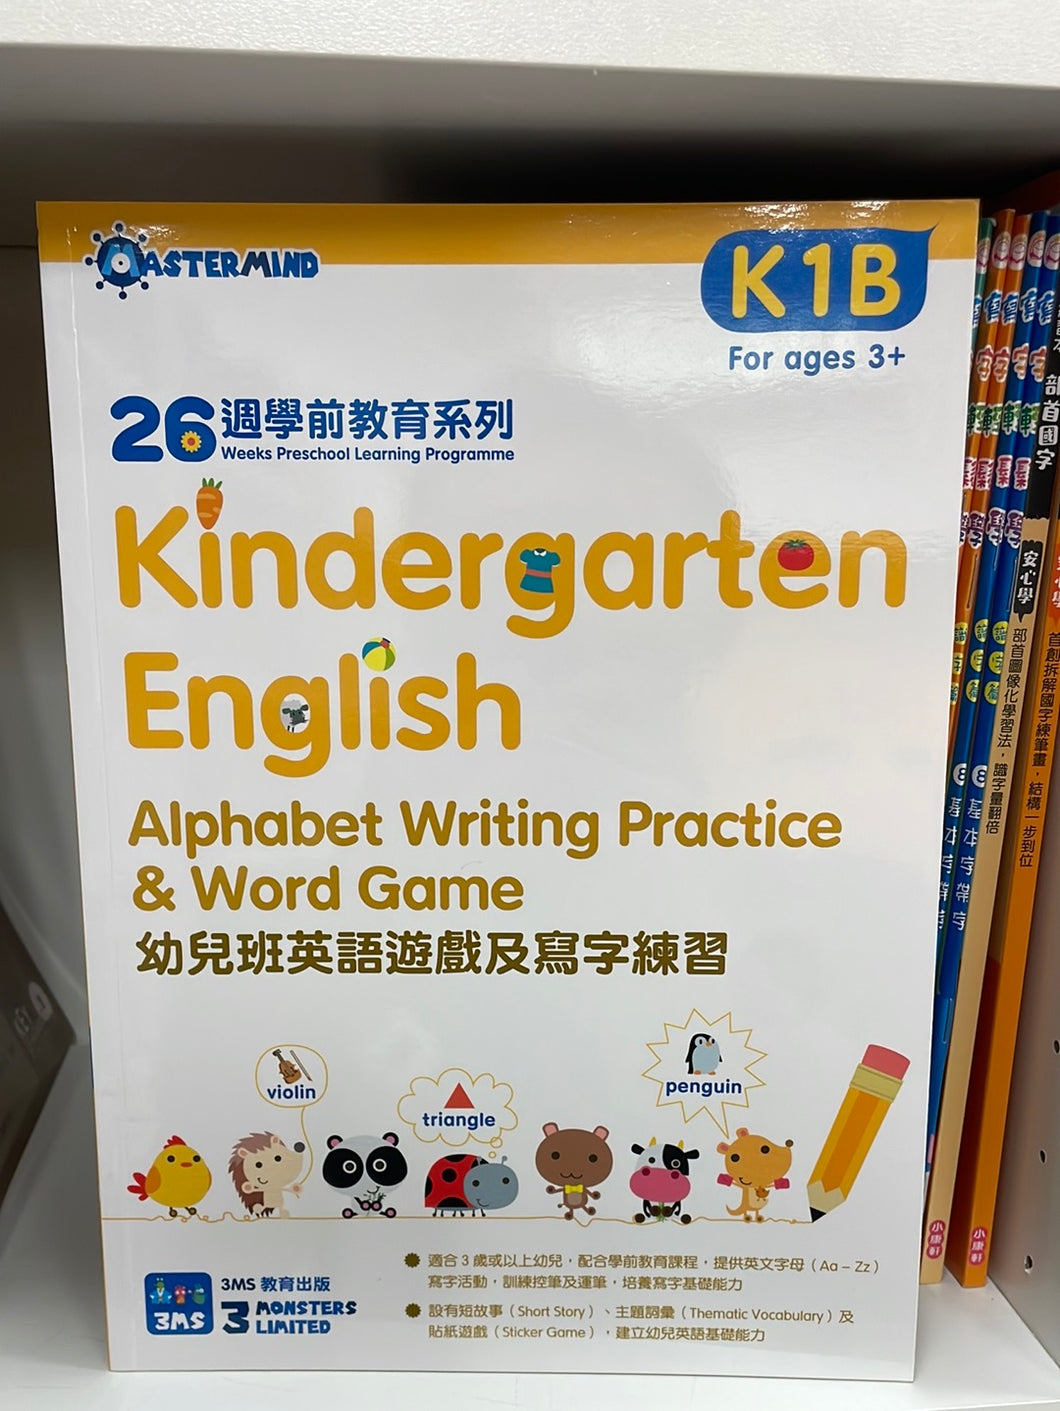 3MS 26週 Kindergarten English Alphabet Writing Practice & Word Game K1-B